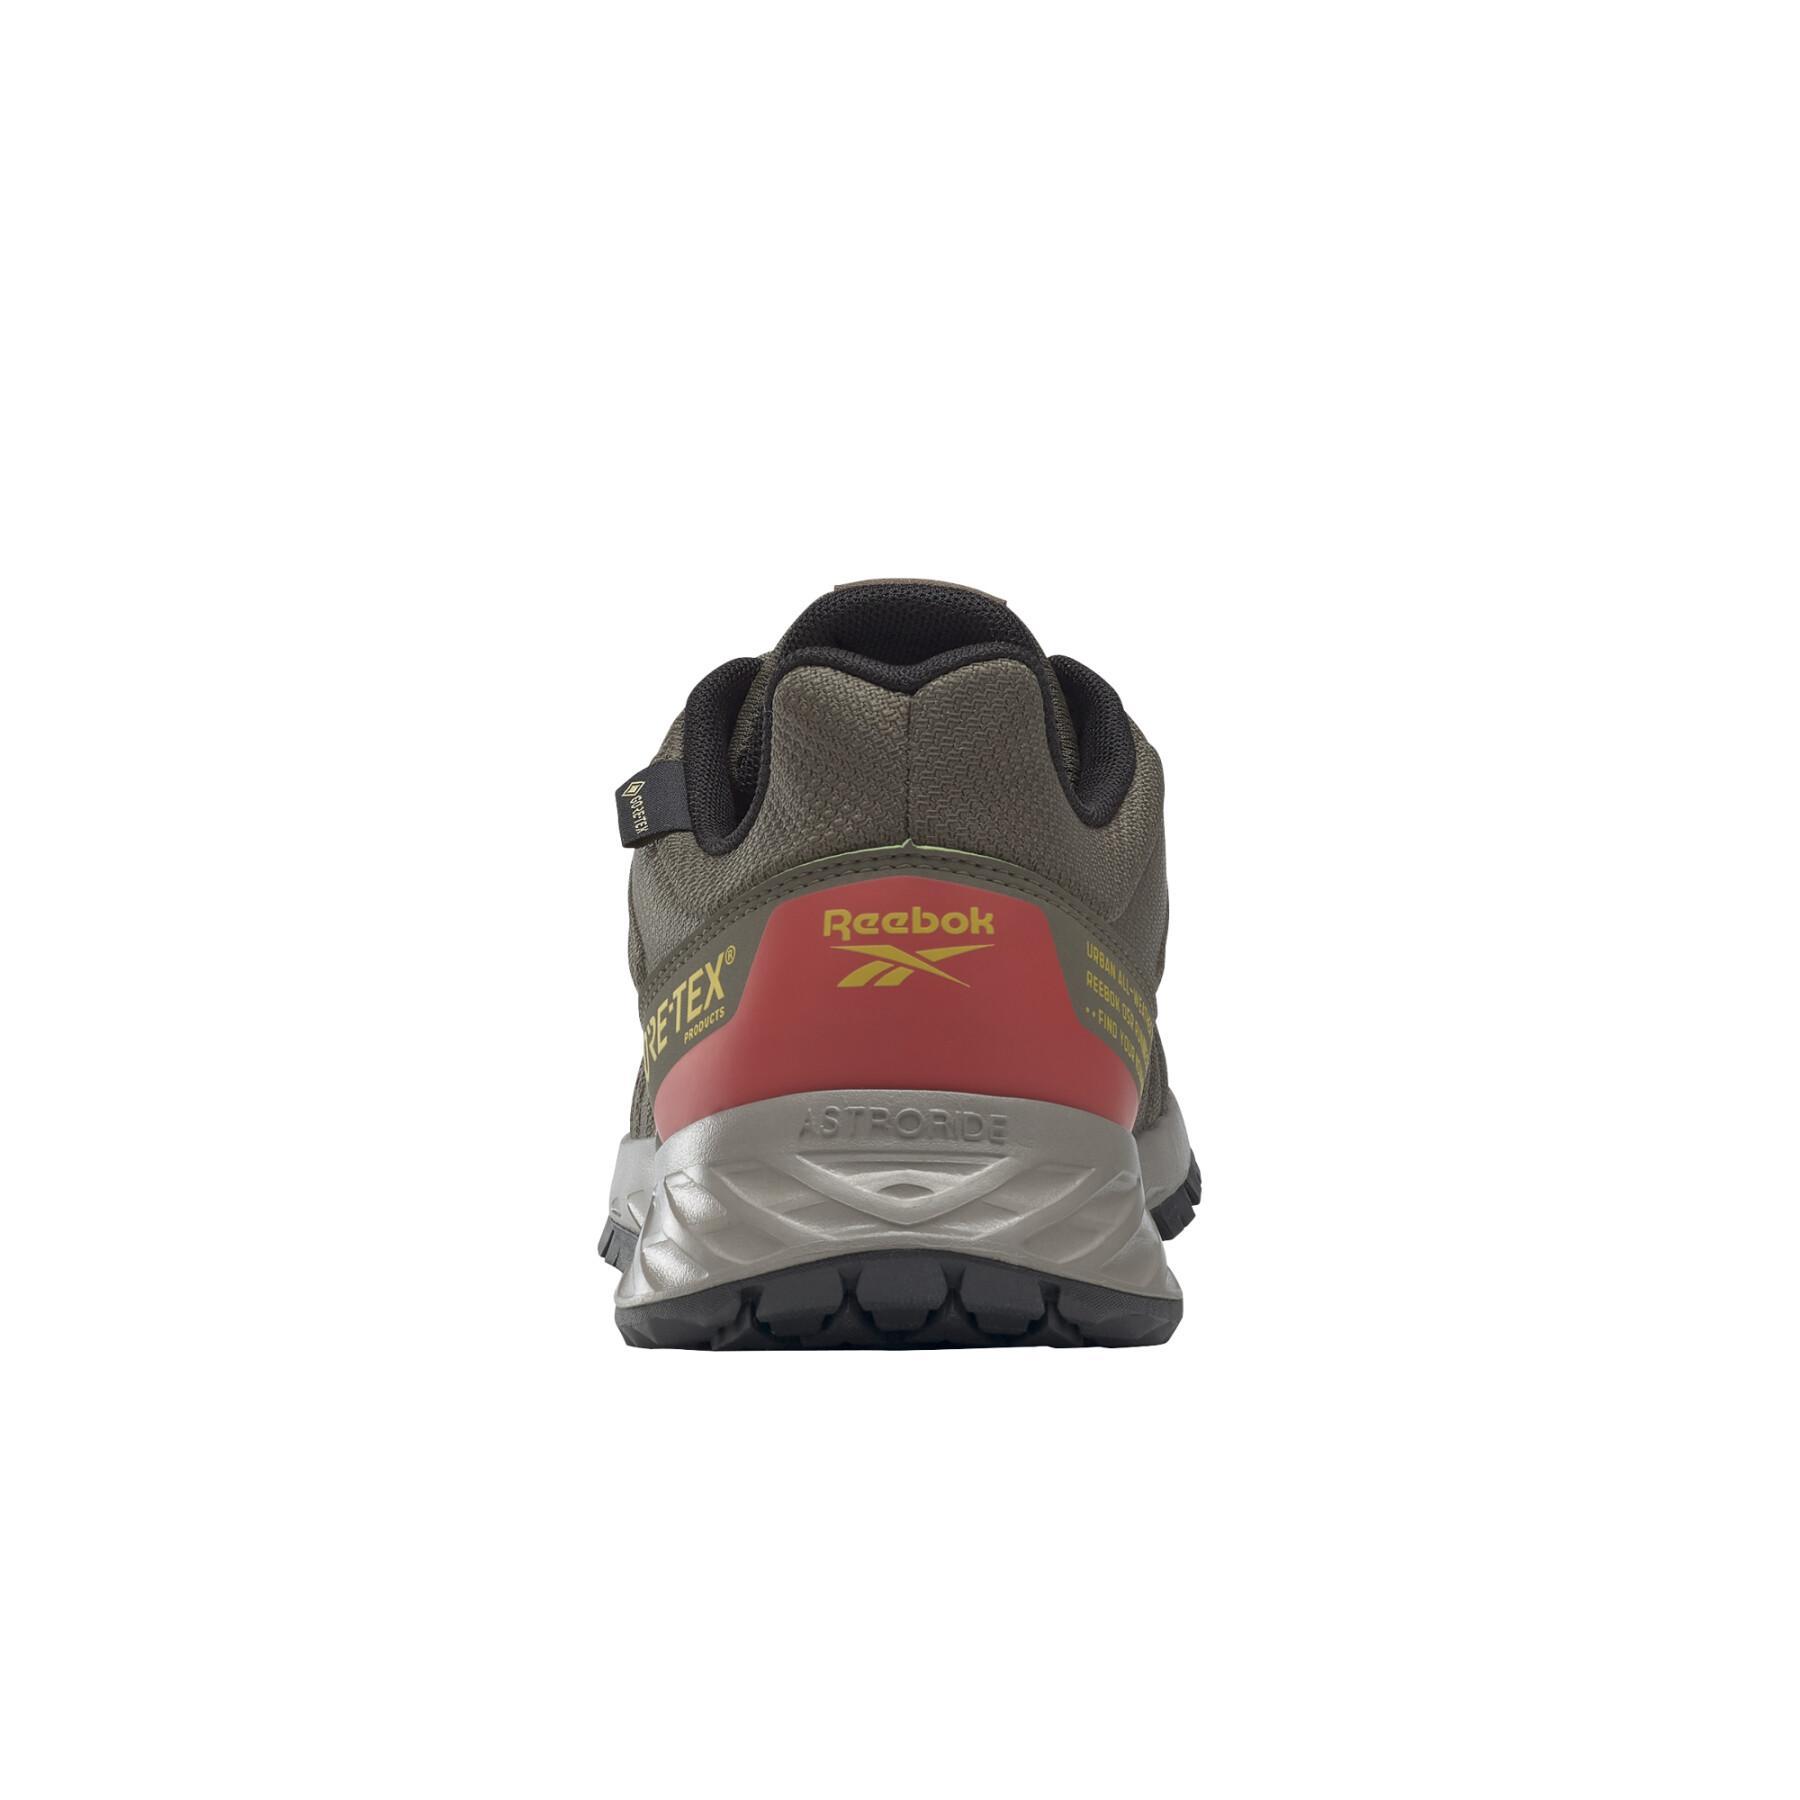 Sneakers Reebok Astroride Trail Gtx 2.0